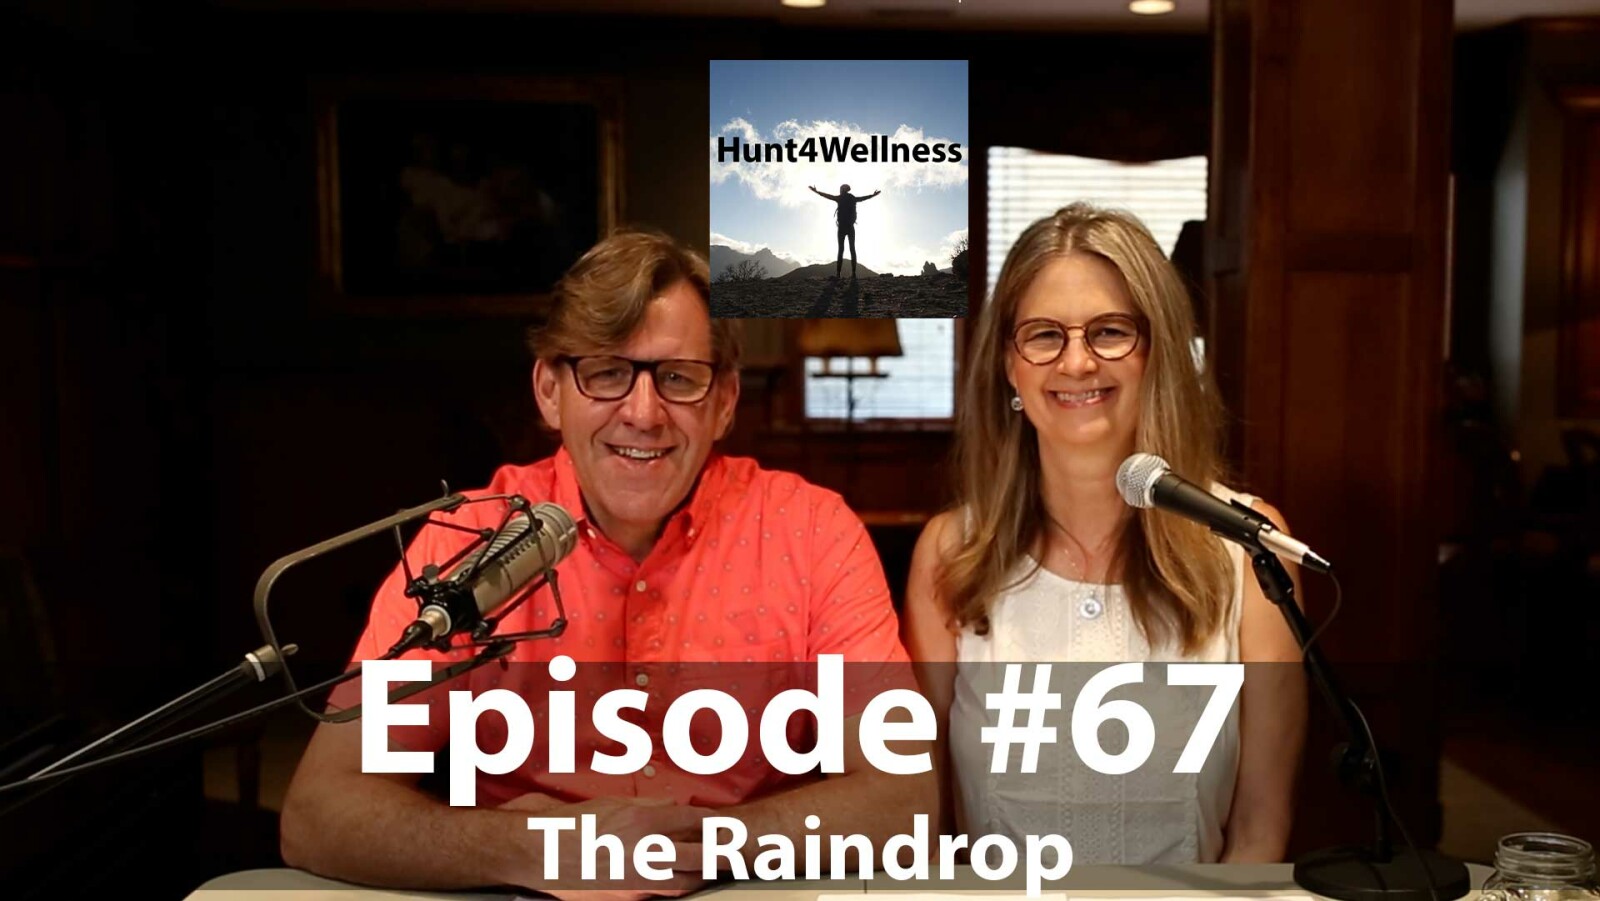 Episode #67 -The Raindrop